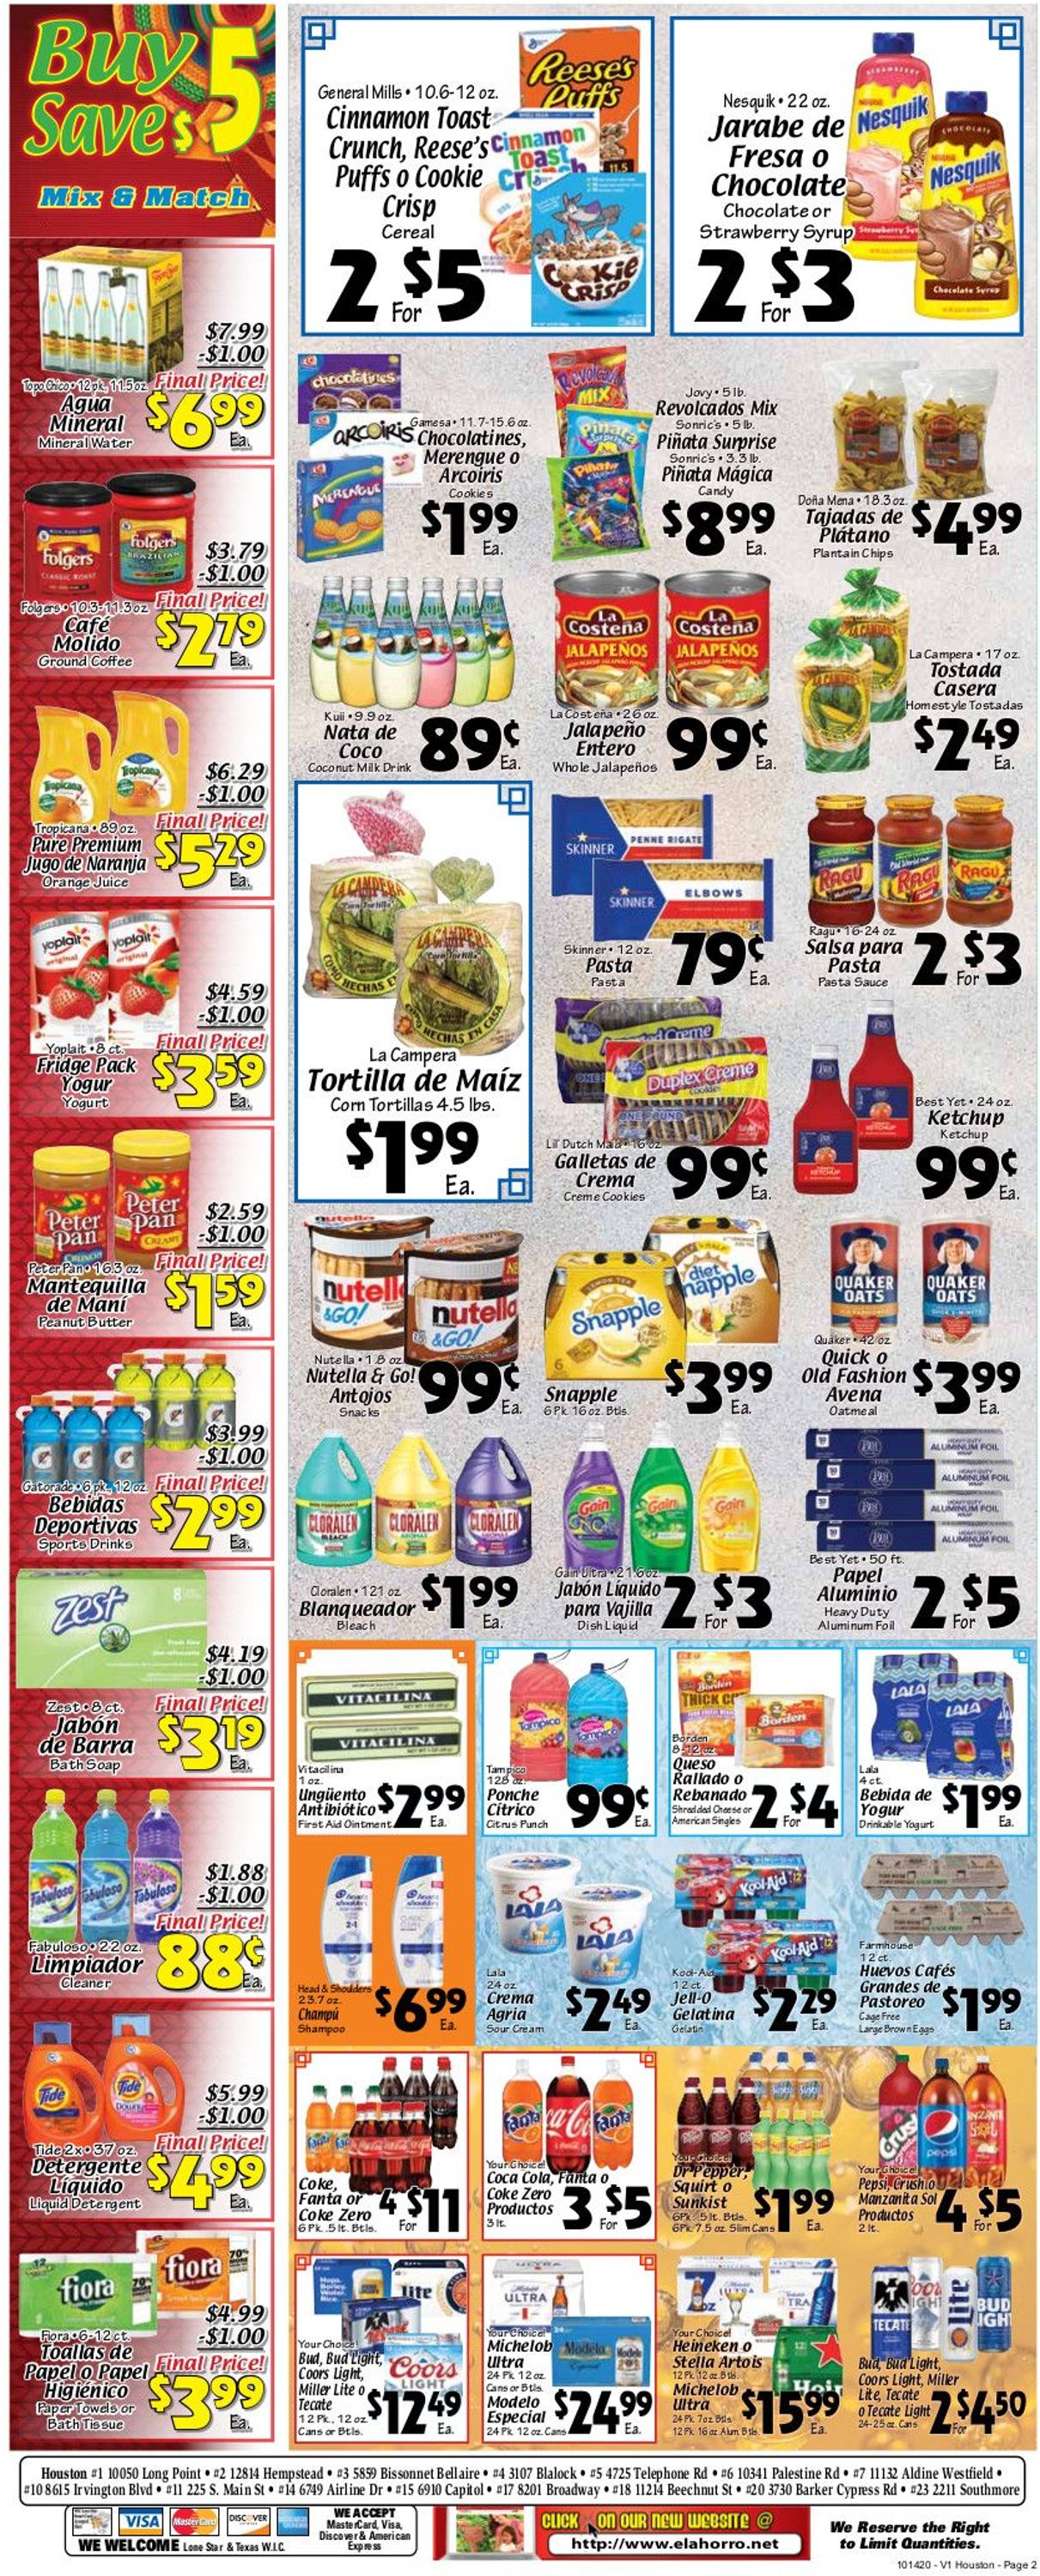 Catalogue El Ahorro Supermarket from 10/14/2020